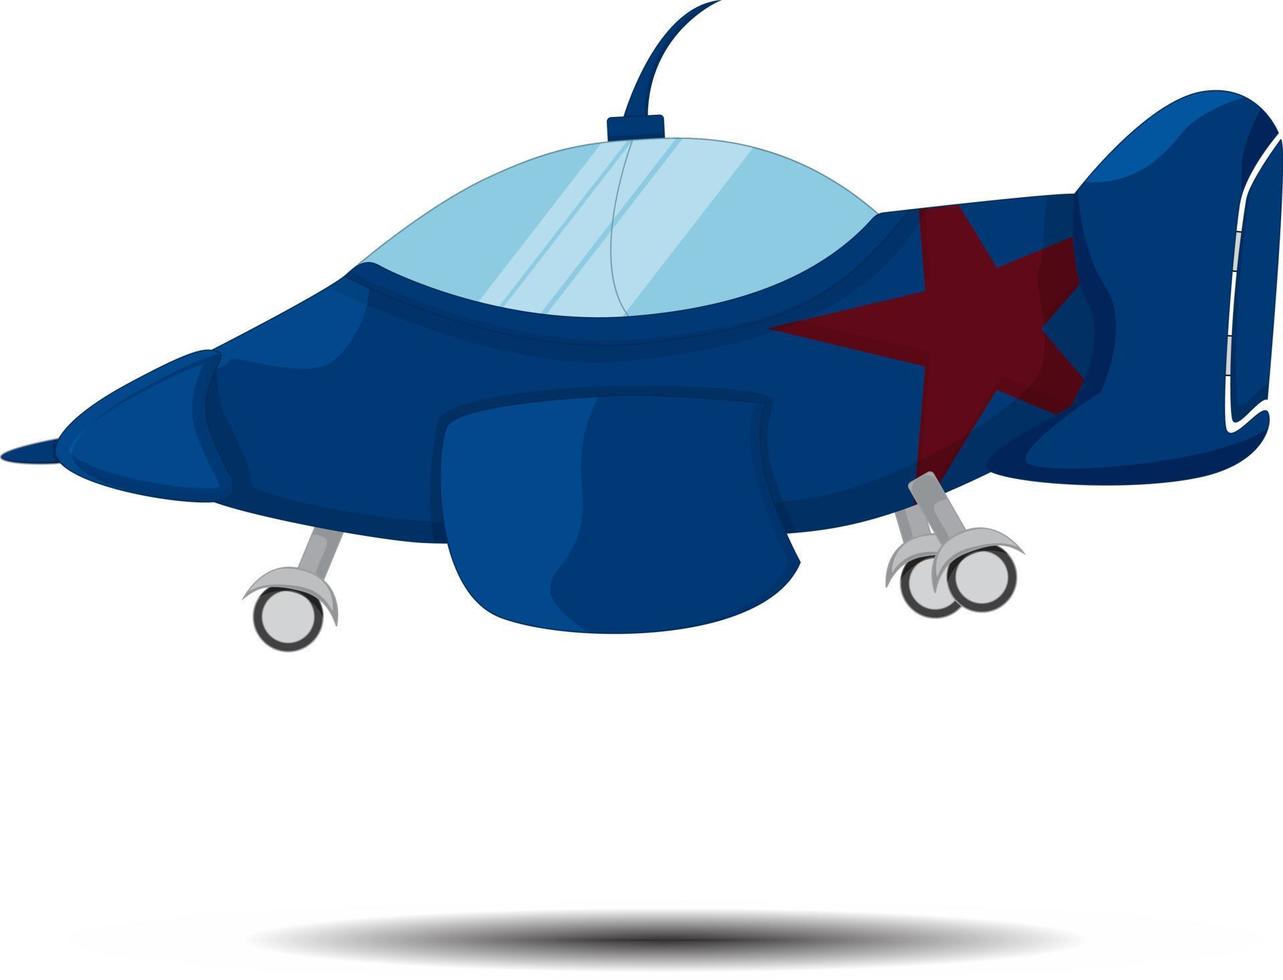 jet fighter combat plane cartoon illustration on white background vector